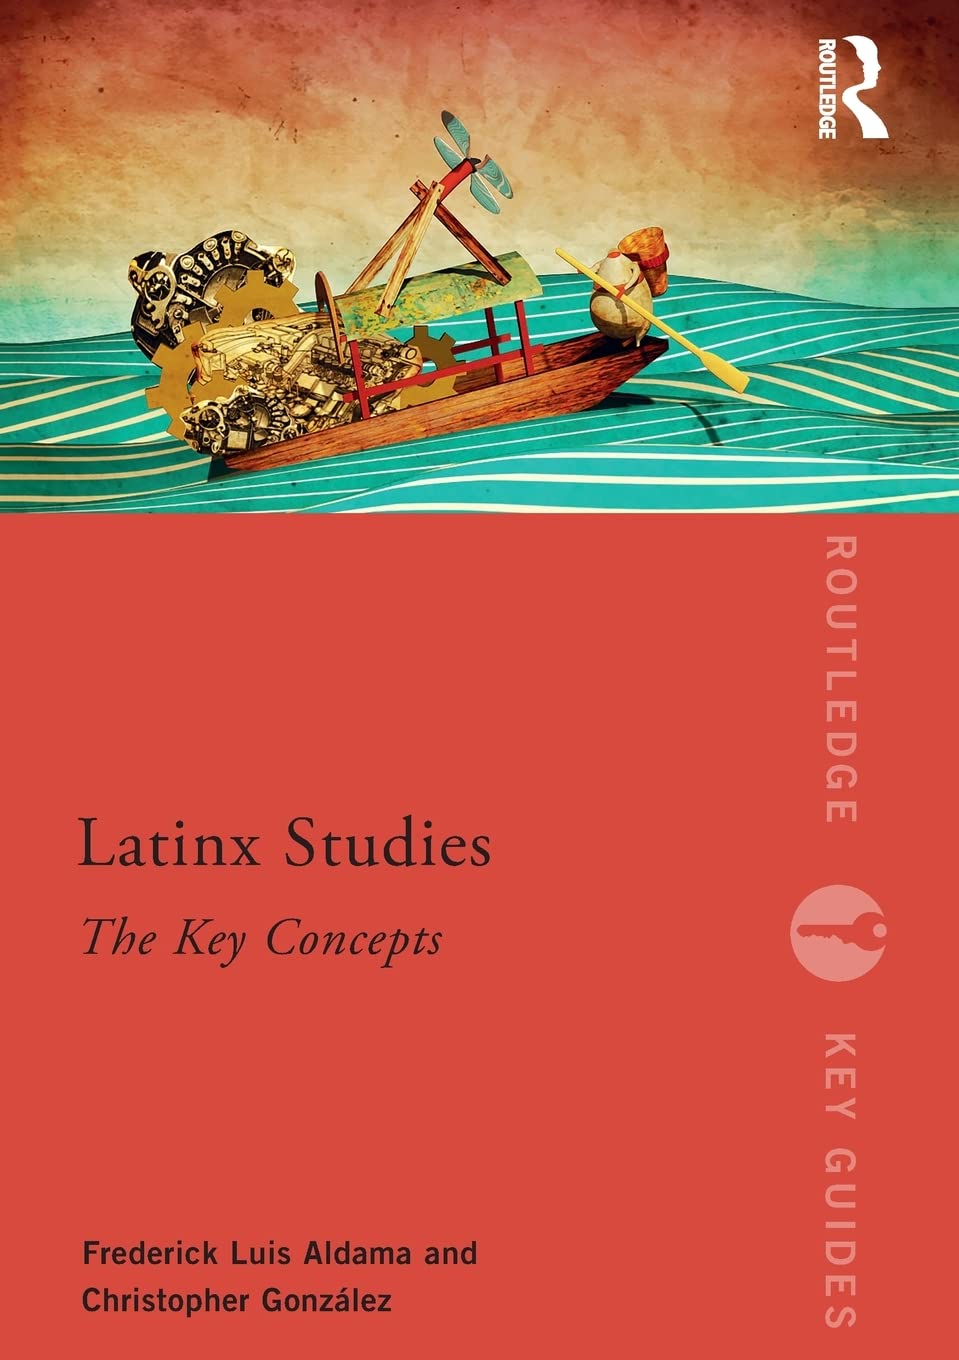 Latinx Studies: the Key Concepts book jacket